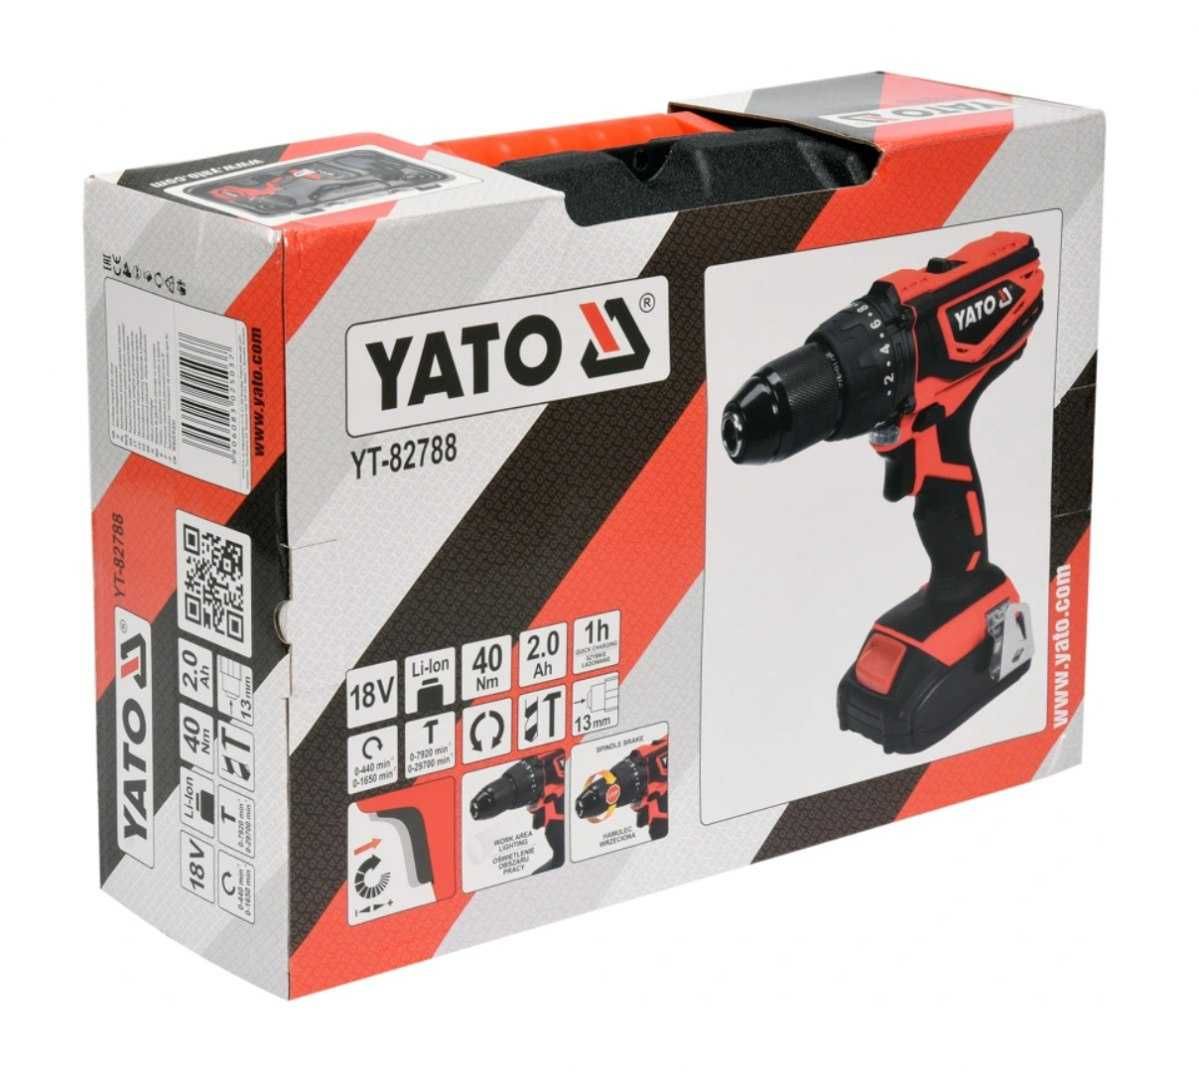 Wkrętarka Yato zasilanie akumulatorowe 18 V YT-82786